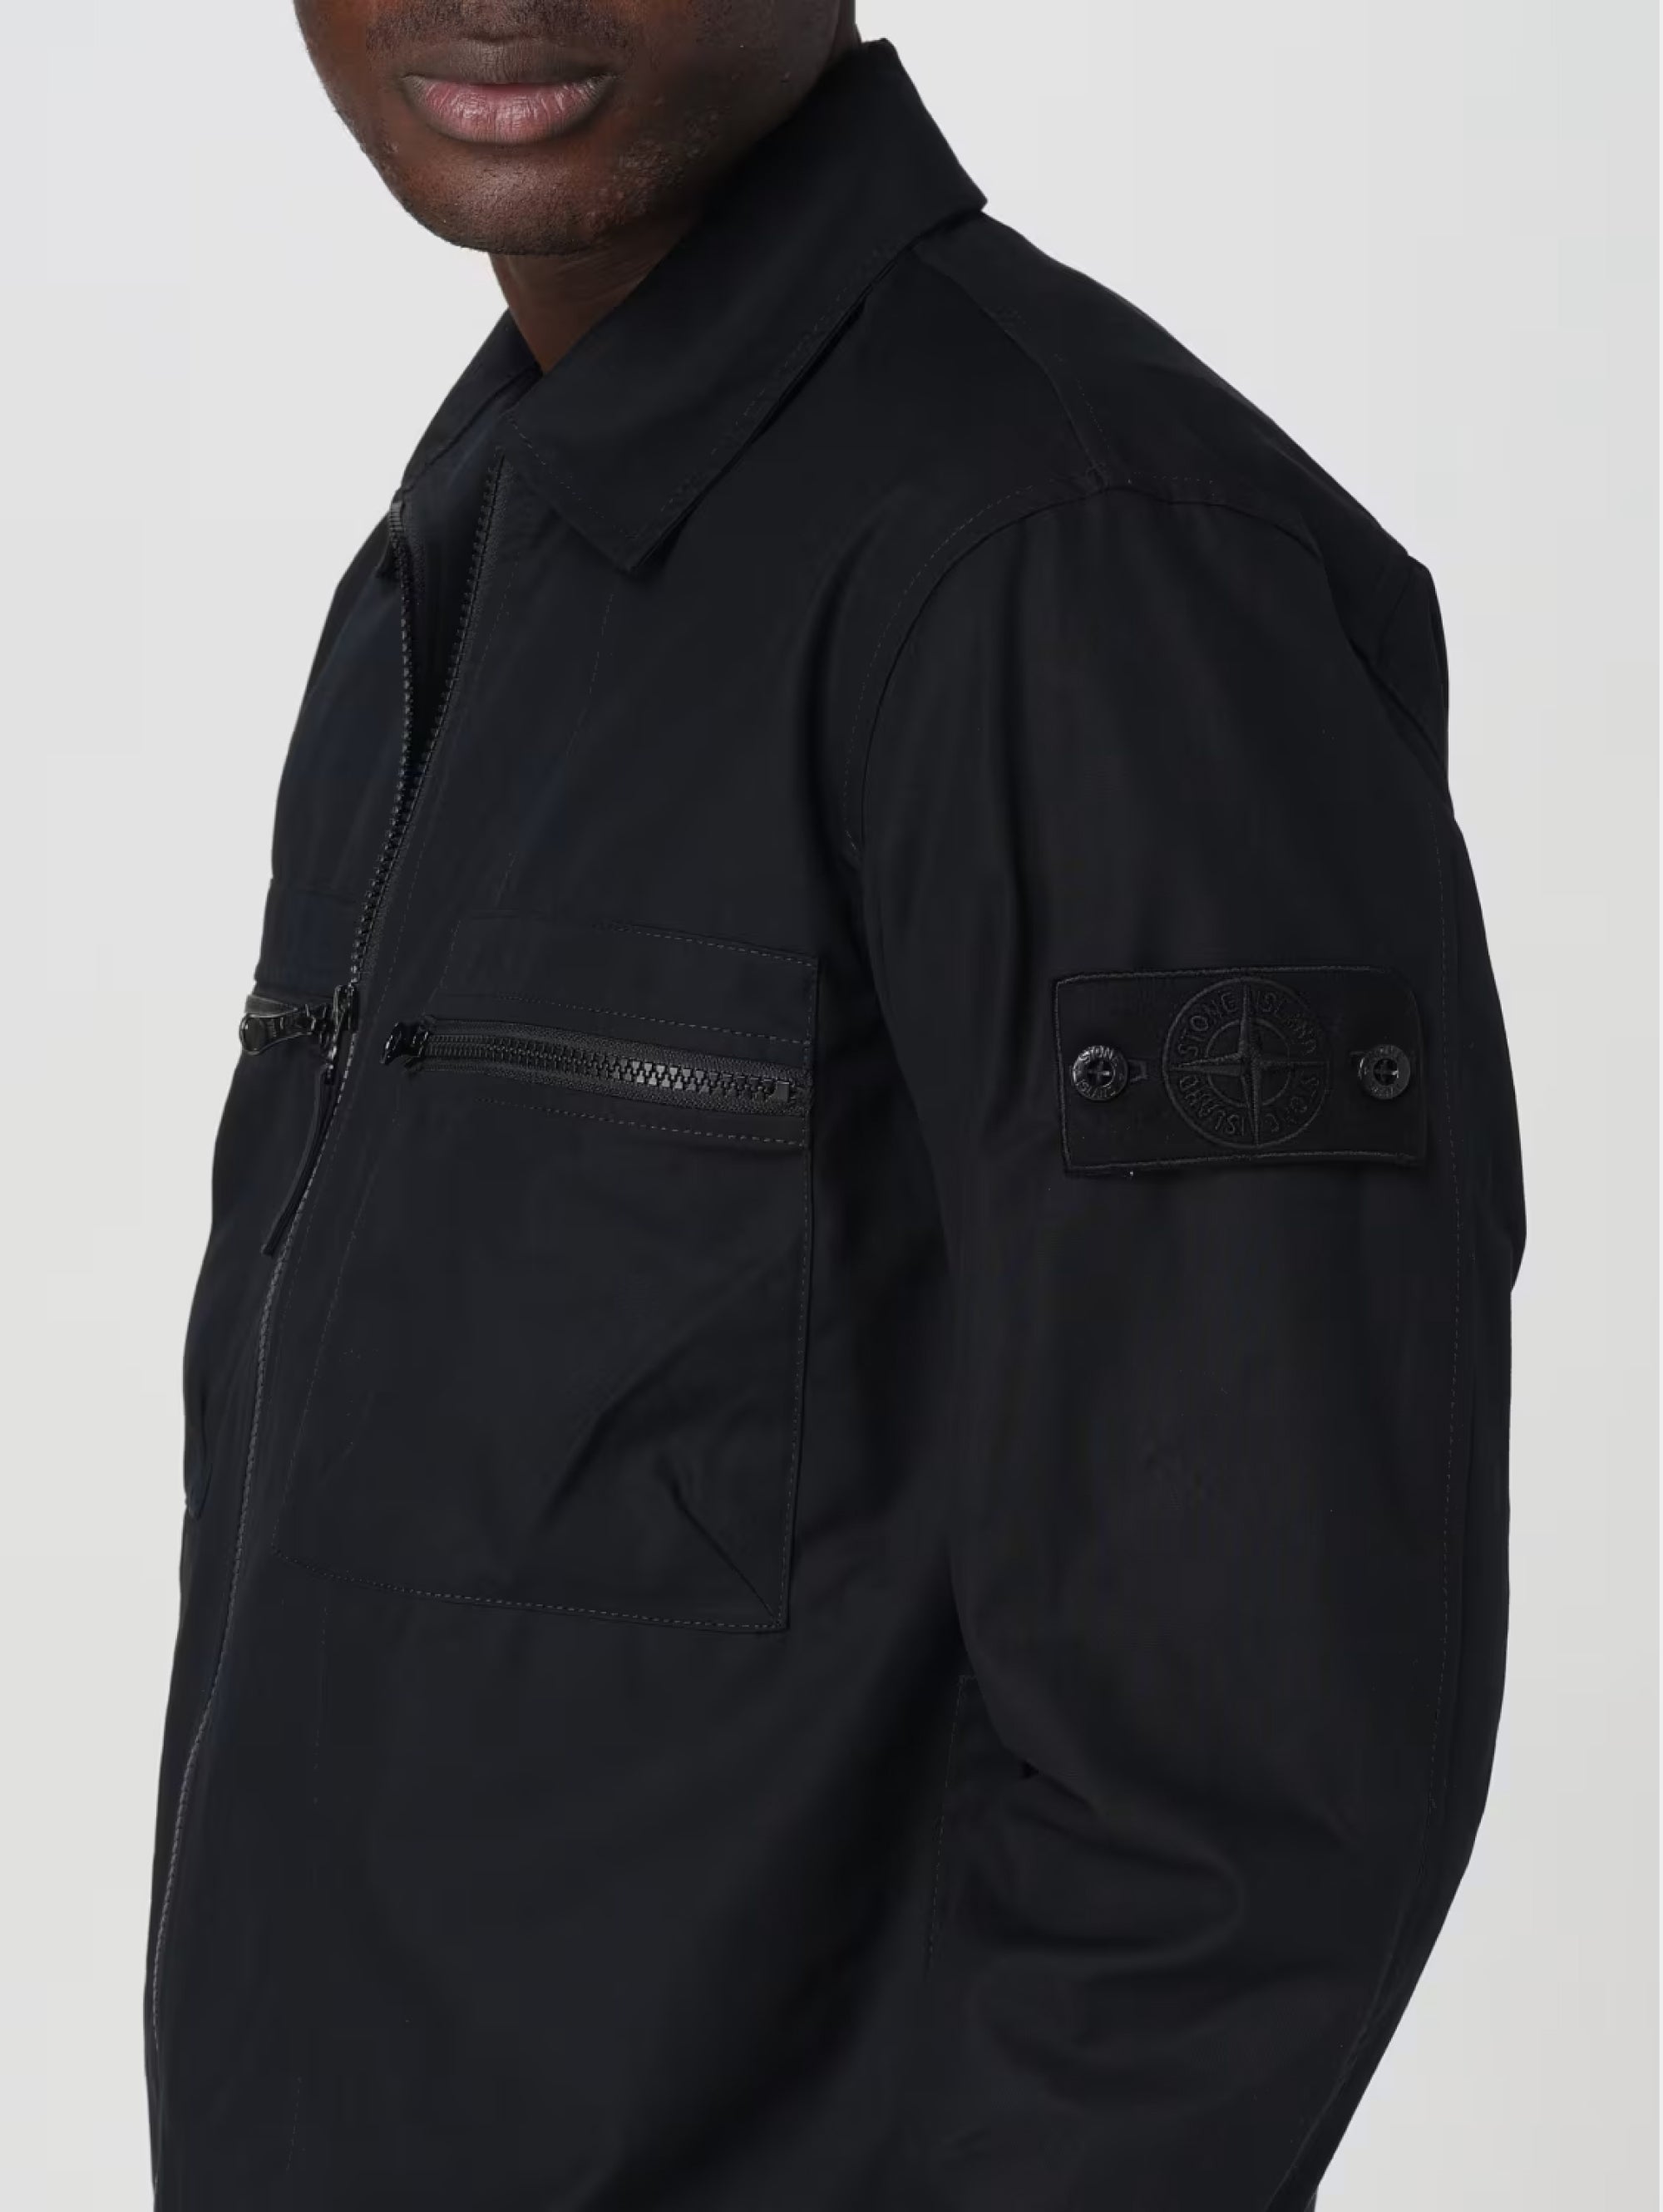 Ghost Piece Jacket in Black Ventile Cotton